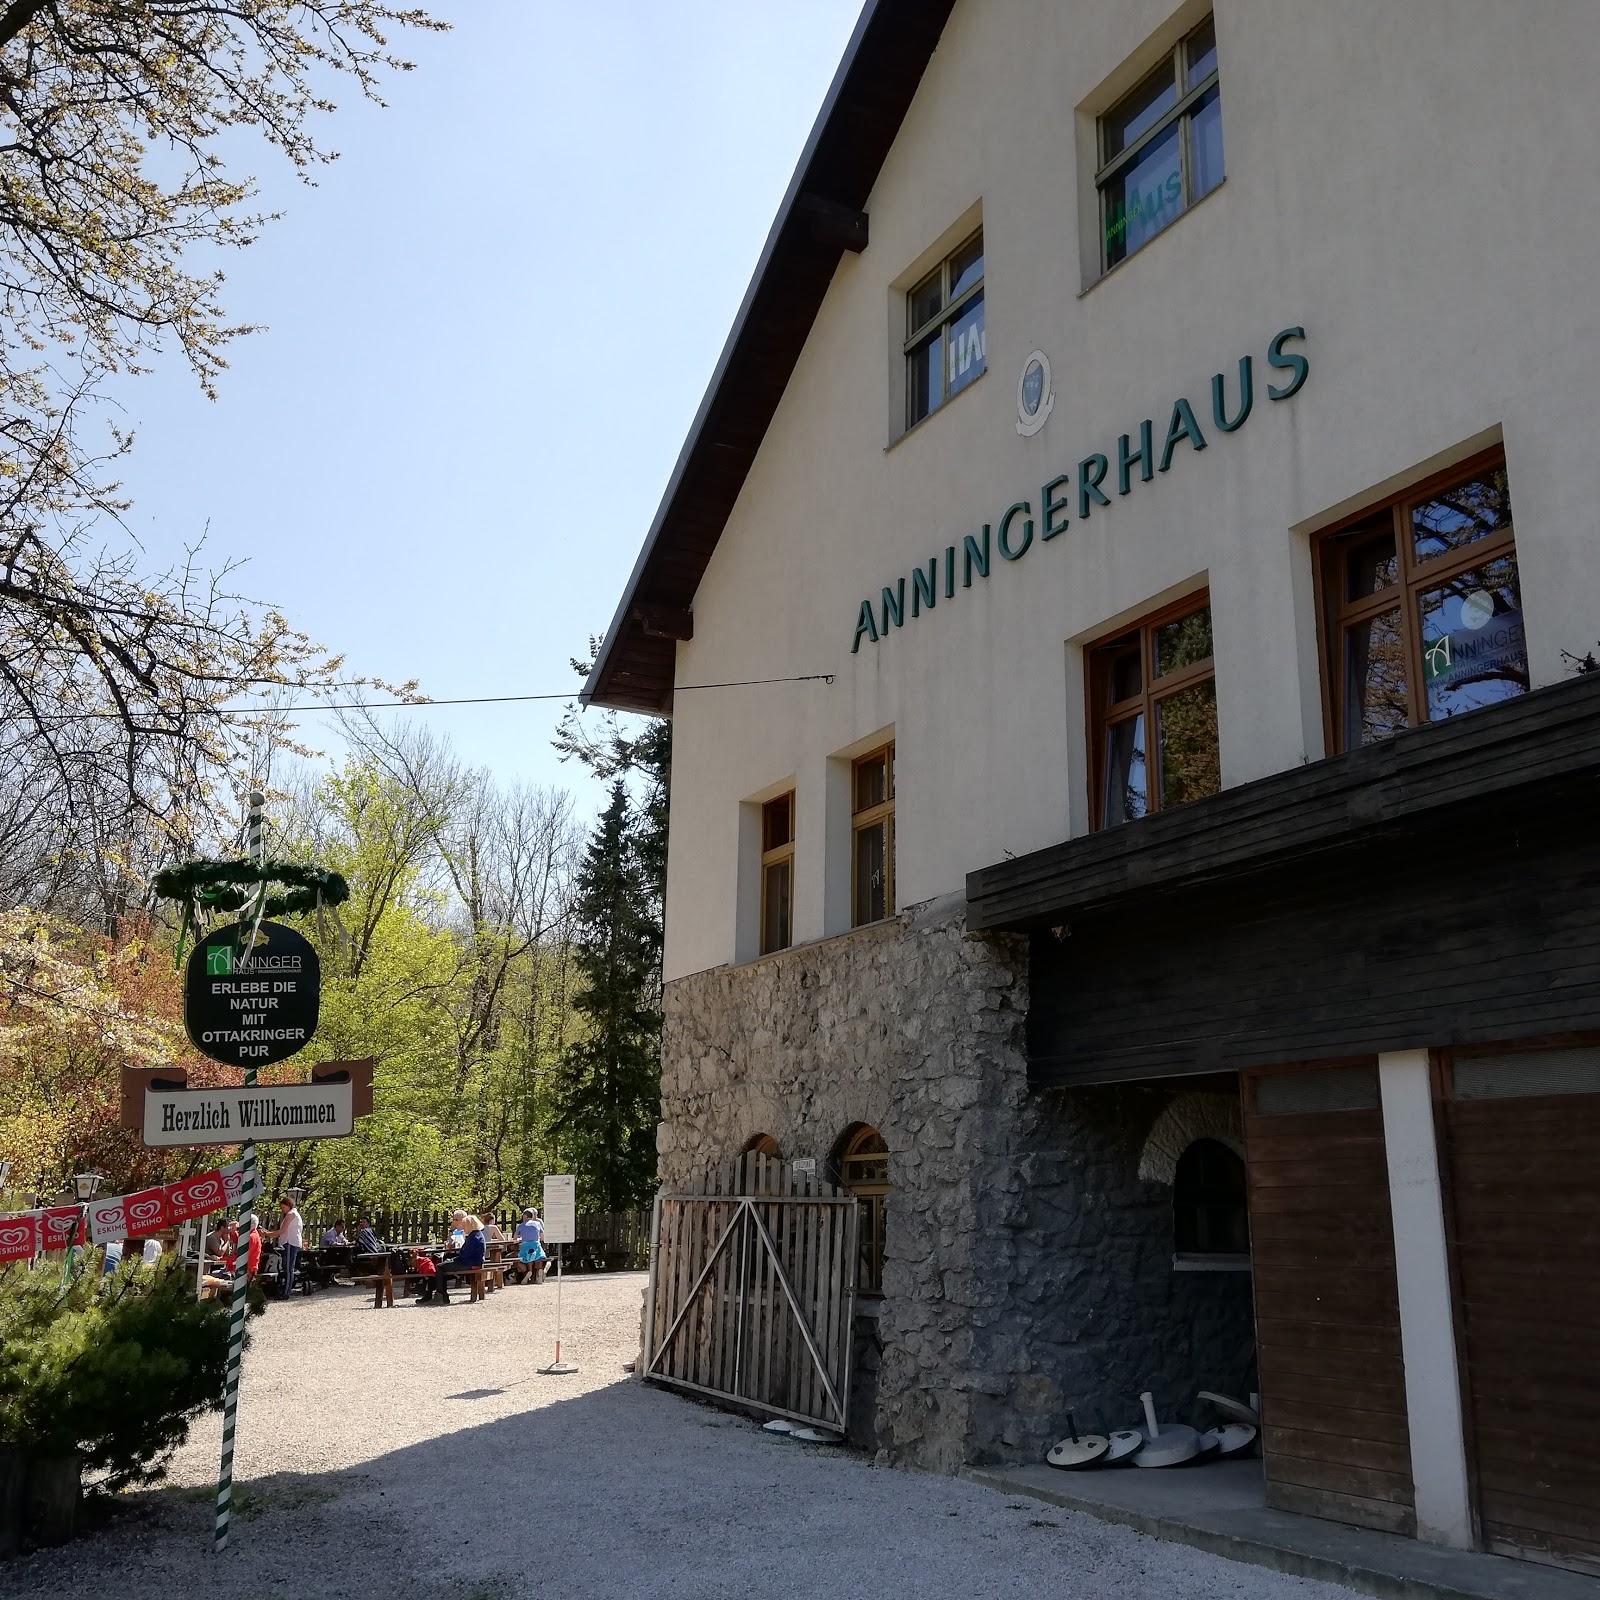 Restaurant "Anningerhaus" in Gaaden bei Mödling